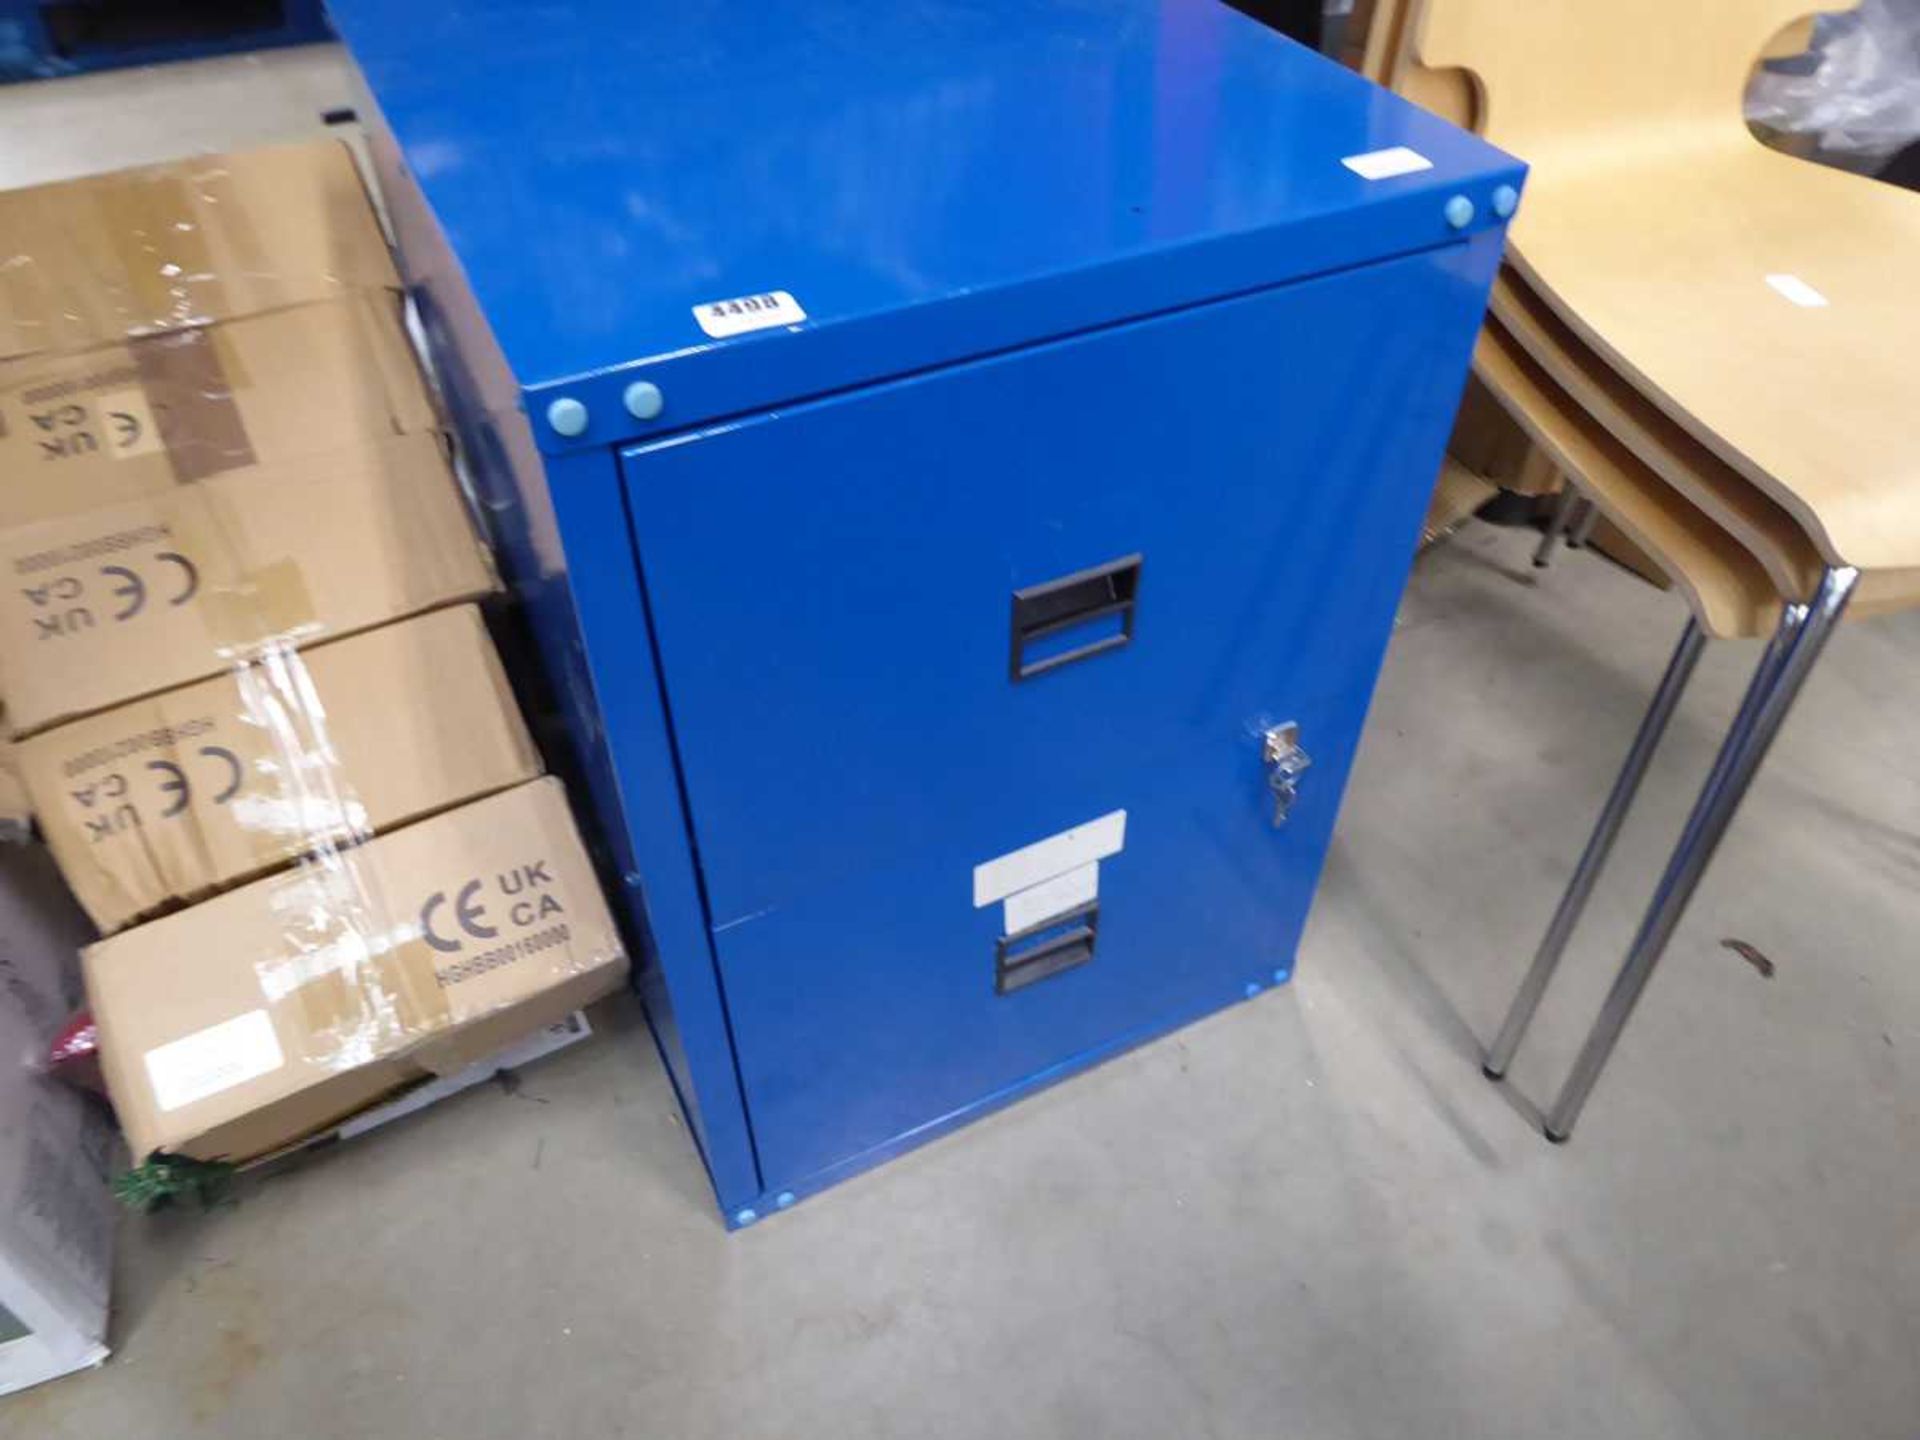 Blue filing cabinet